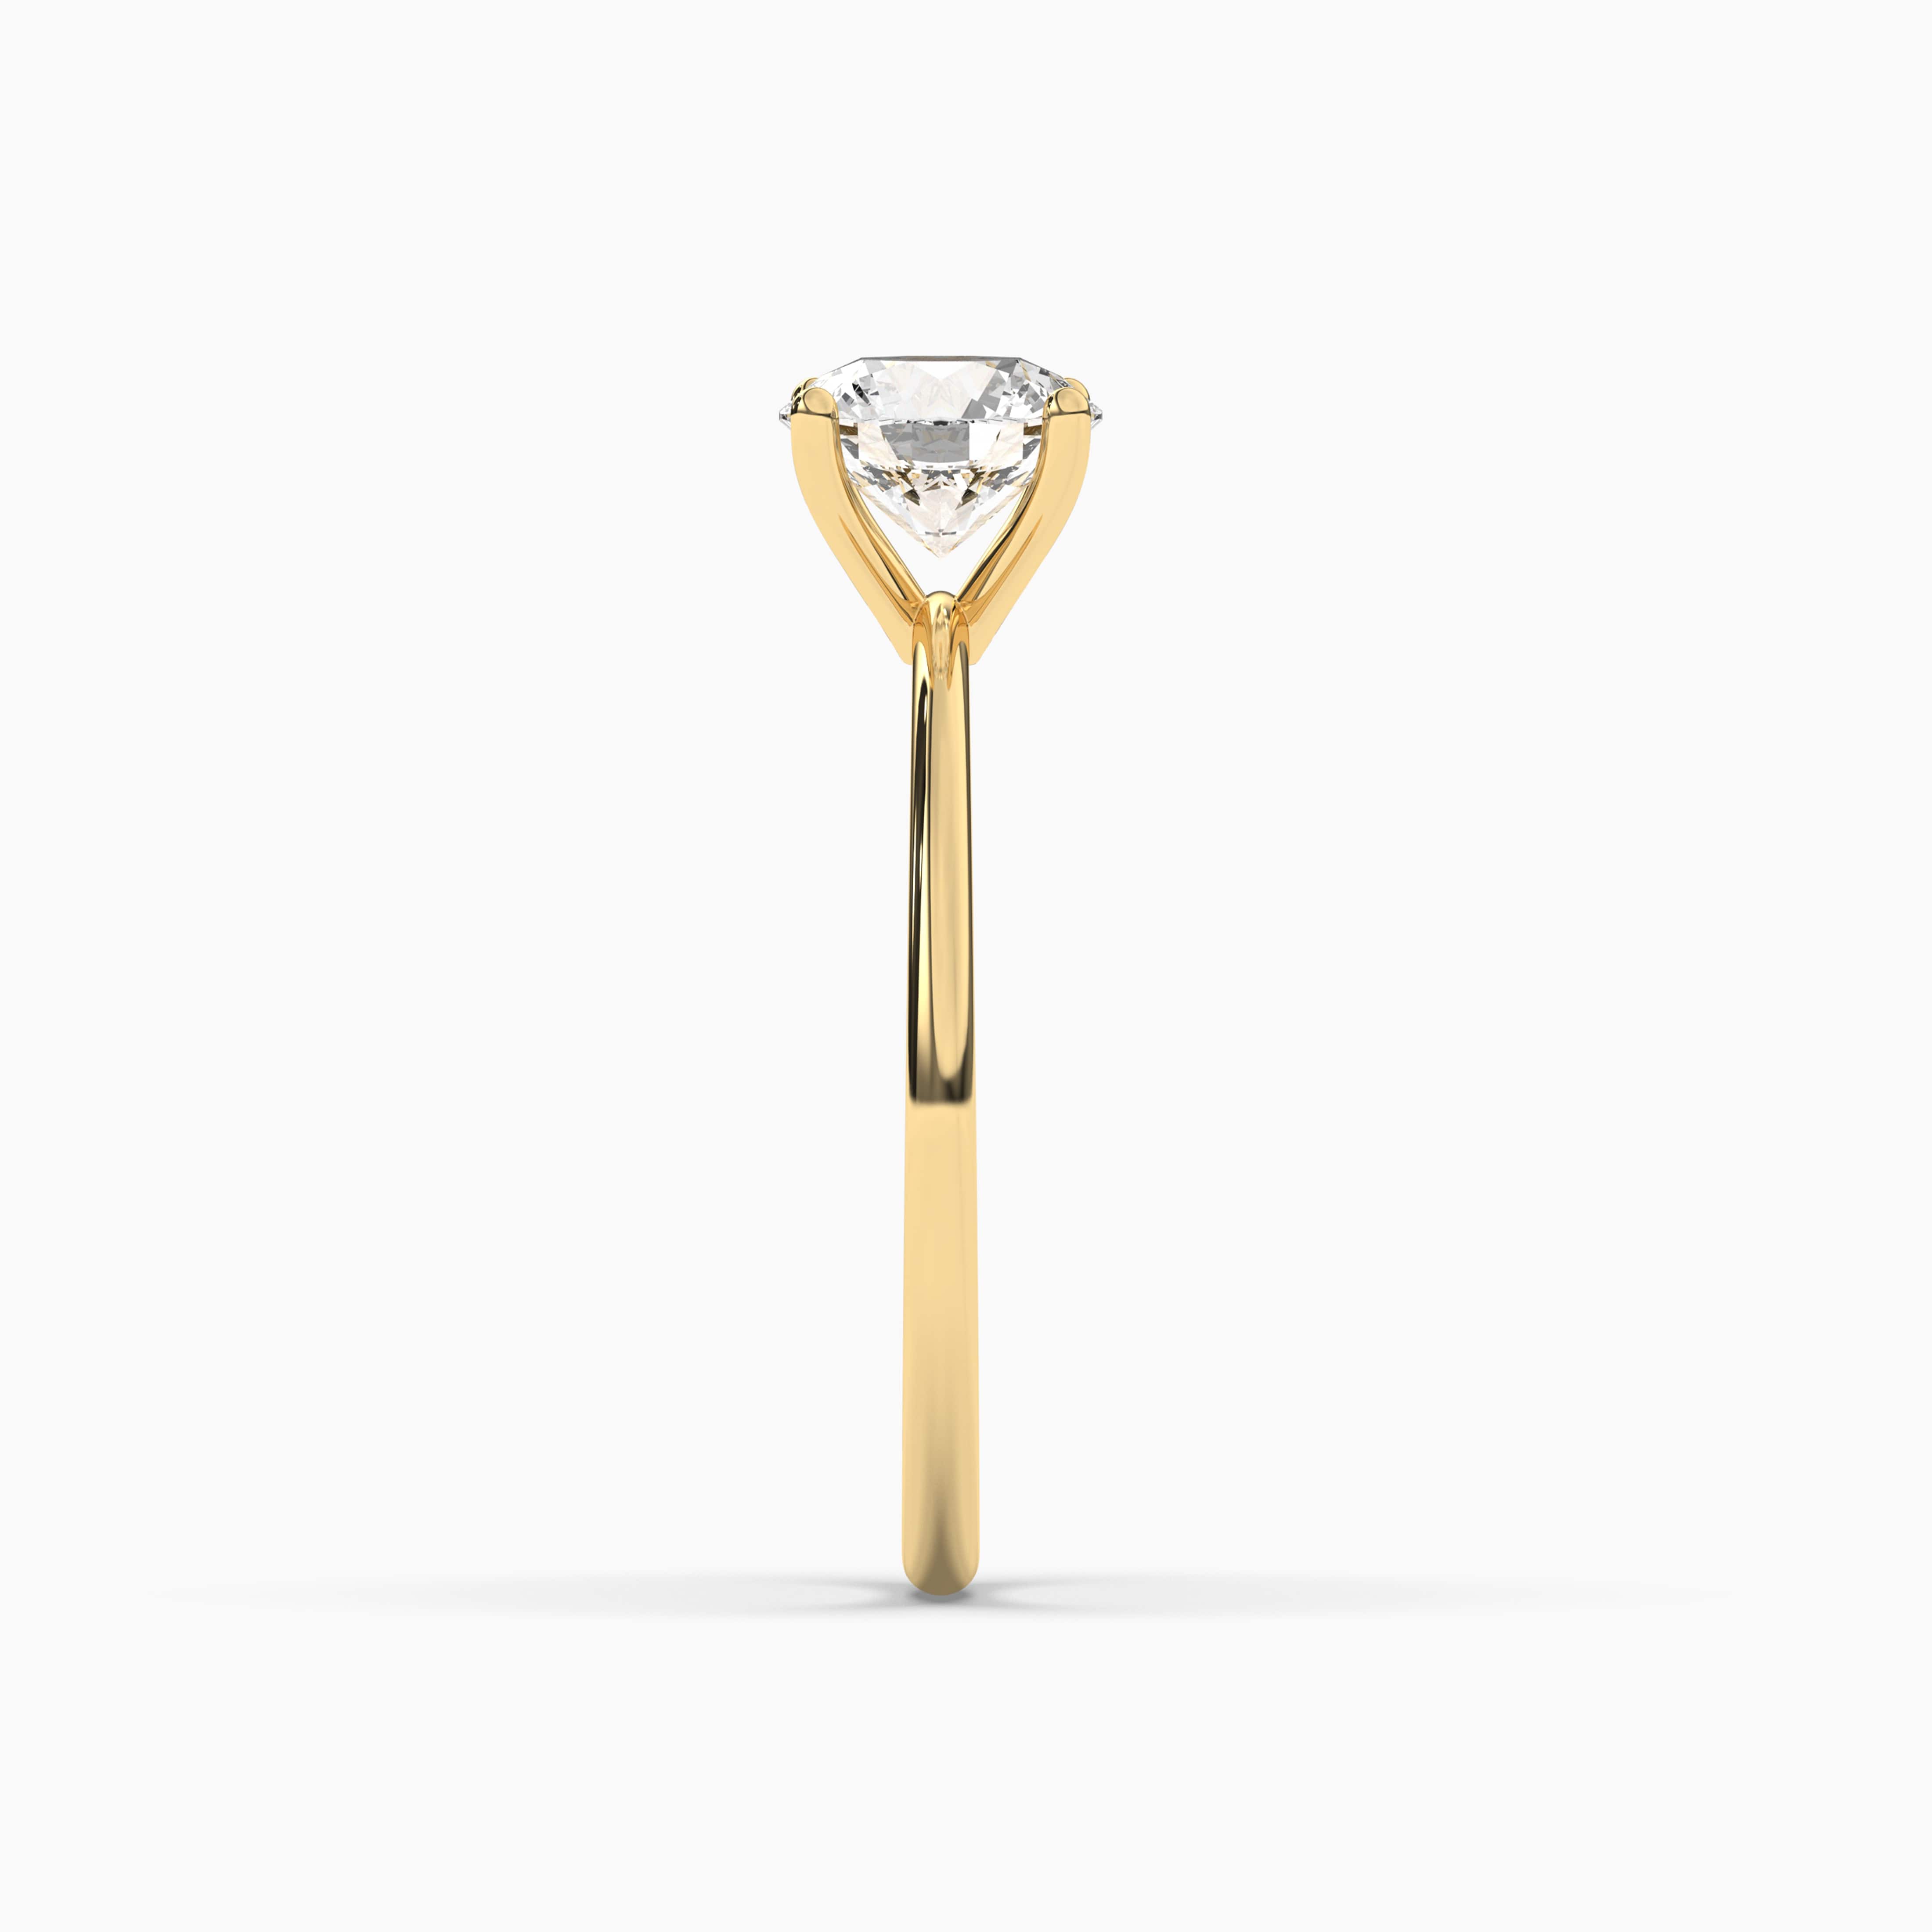 Solitaire Diamond Rings for Women